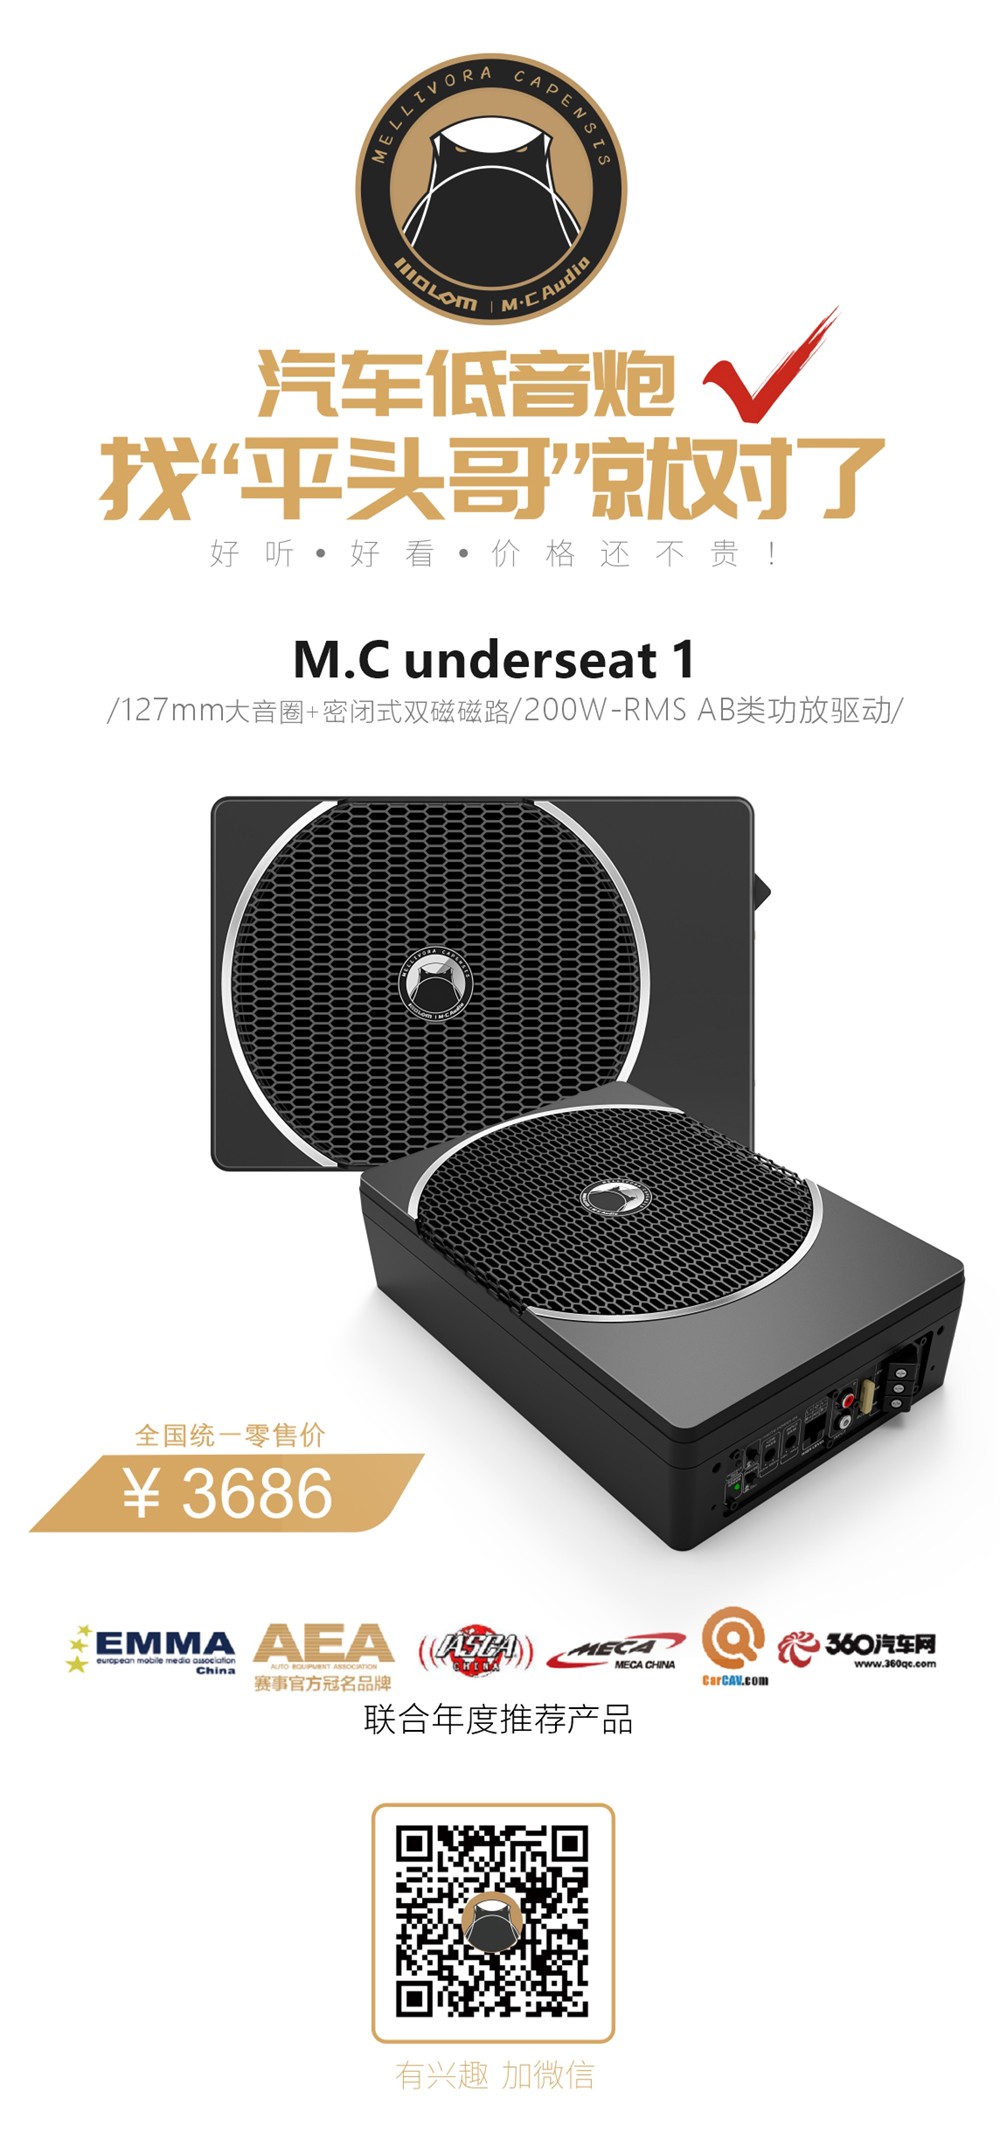 M.C underseat 1详情.jpg